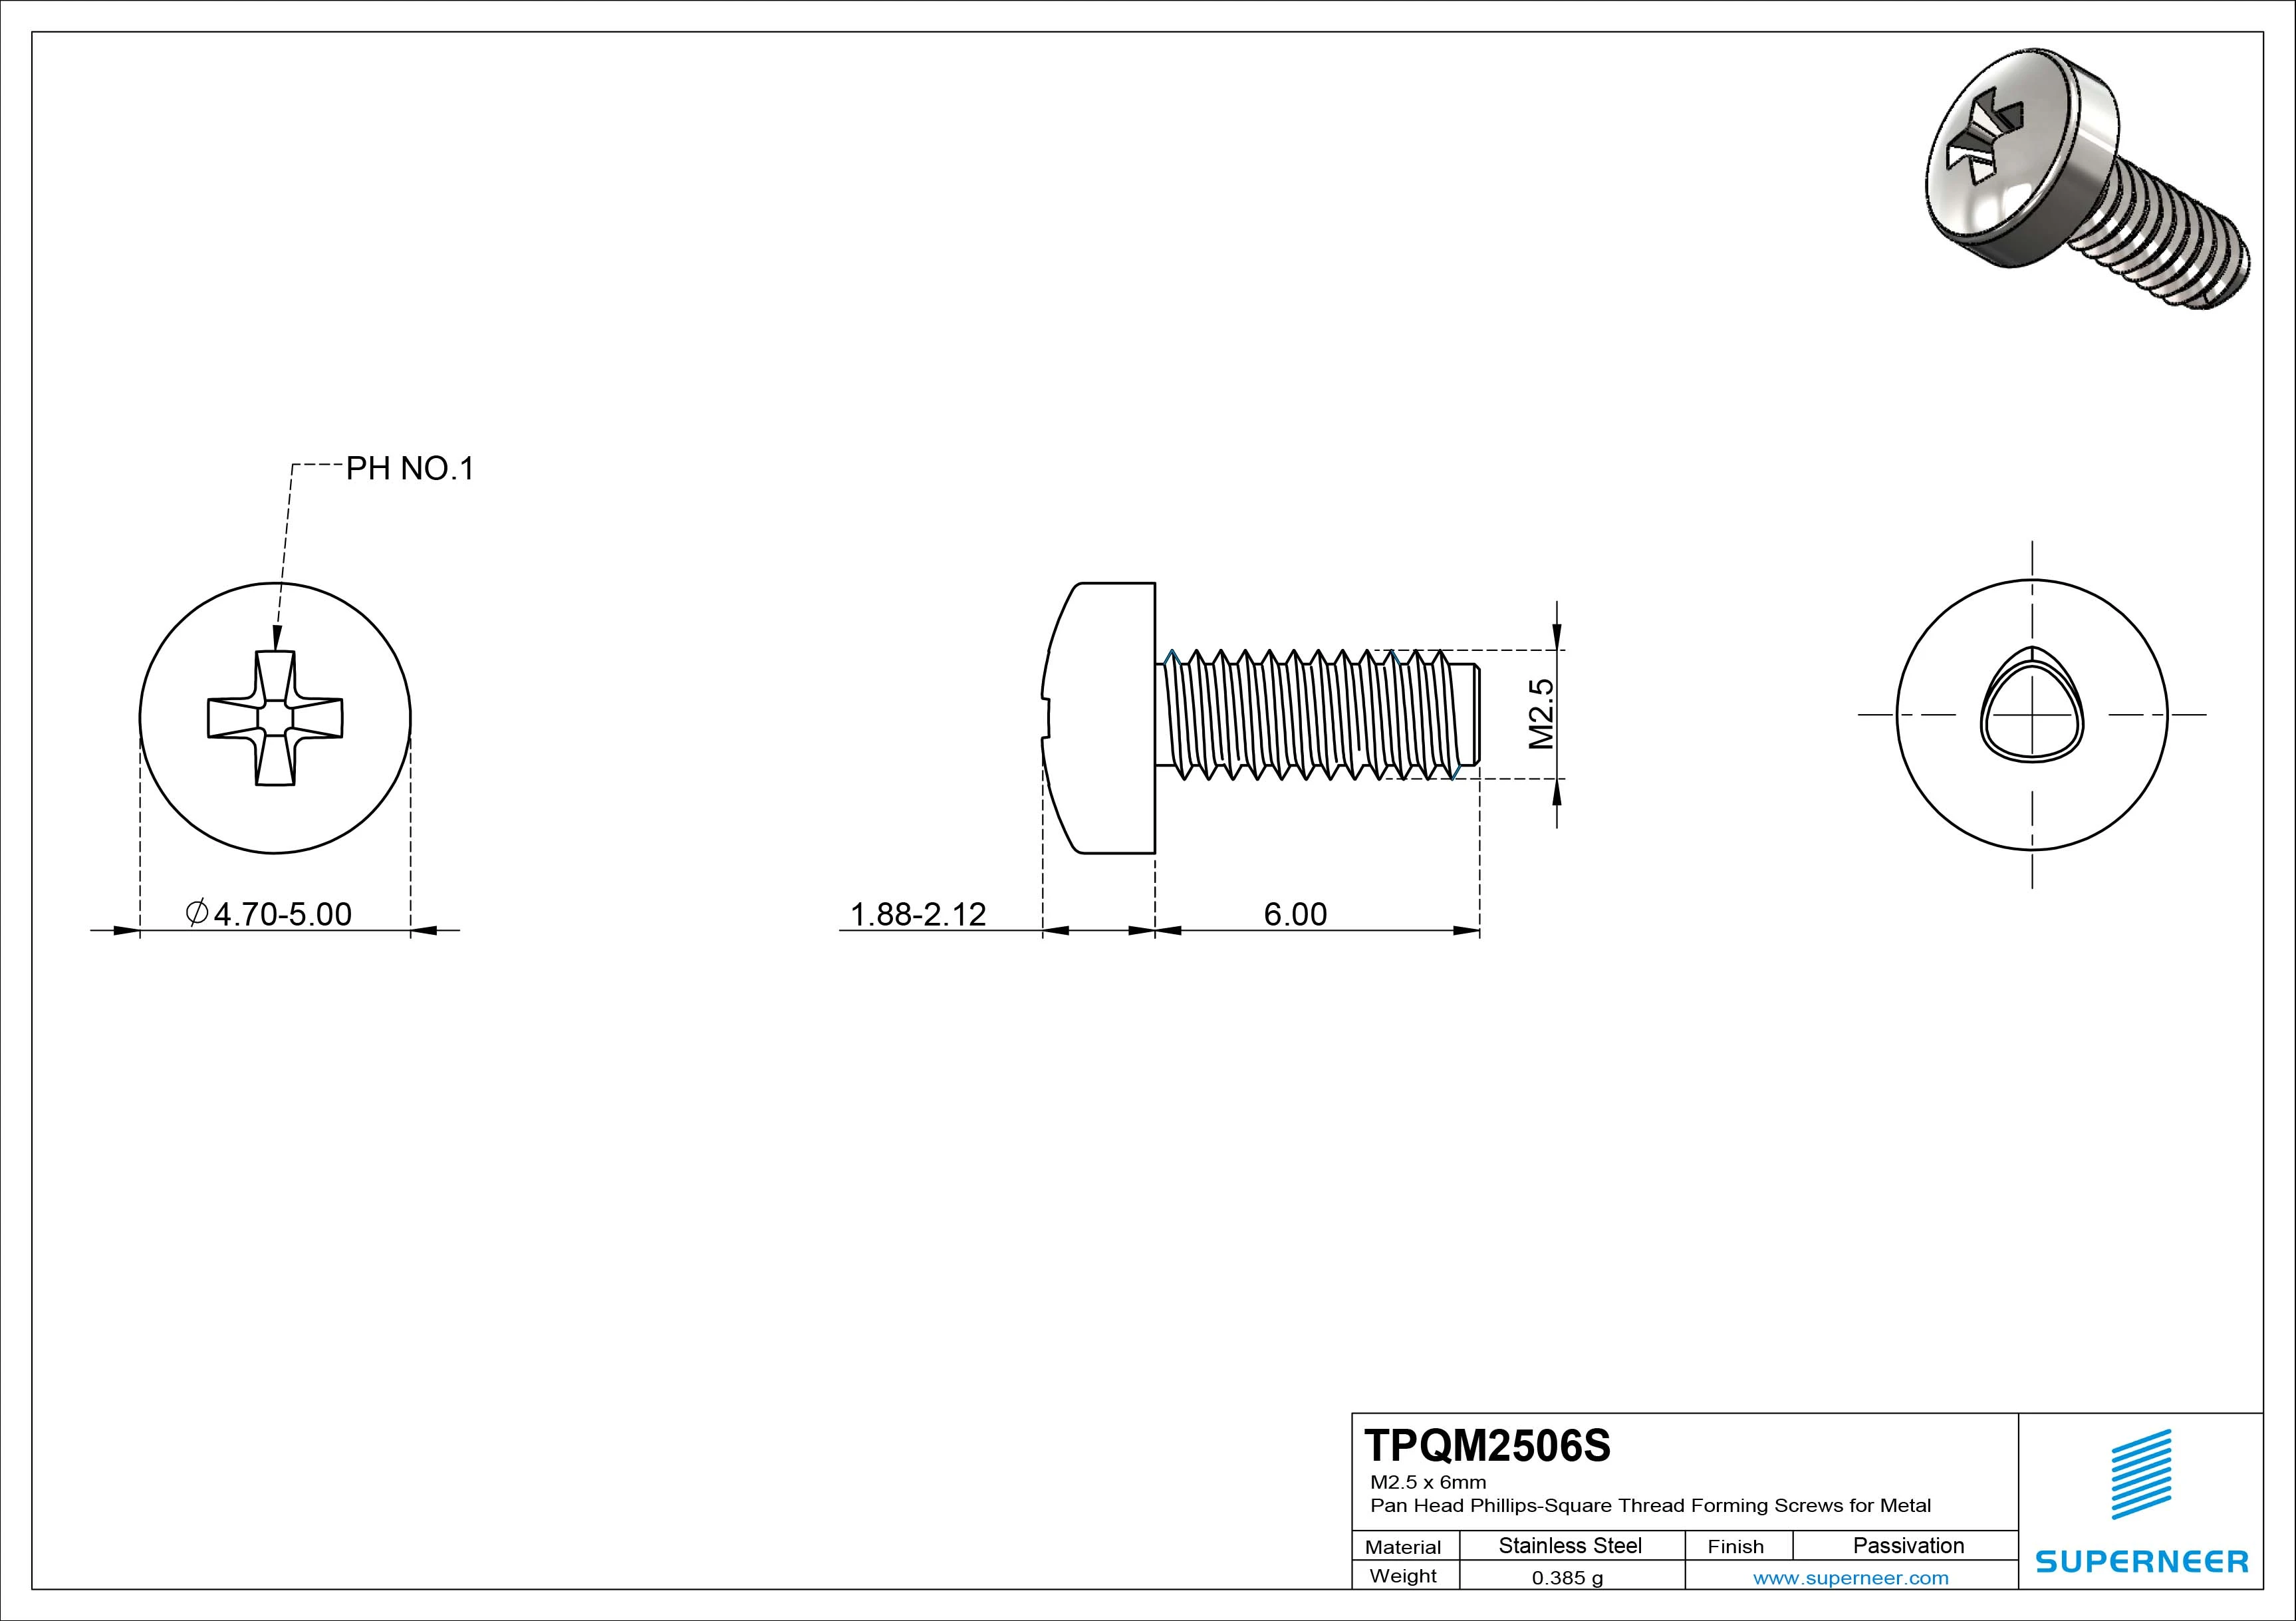 M2.5 × 6mm Pan Head Phillips-Square Thread Forming Screws for Metal SUS304 Stainless Steel Inox